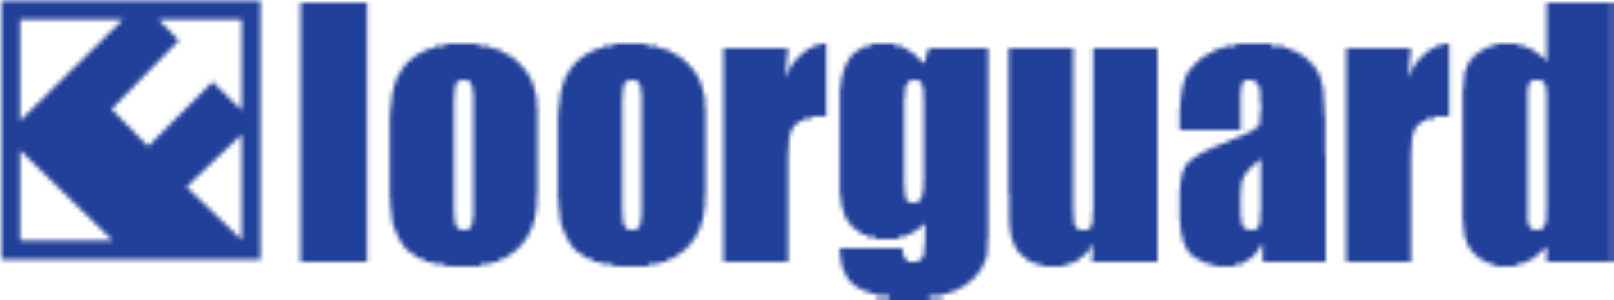 Floorguard Logo